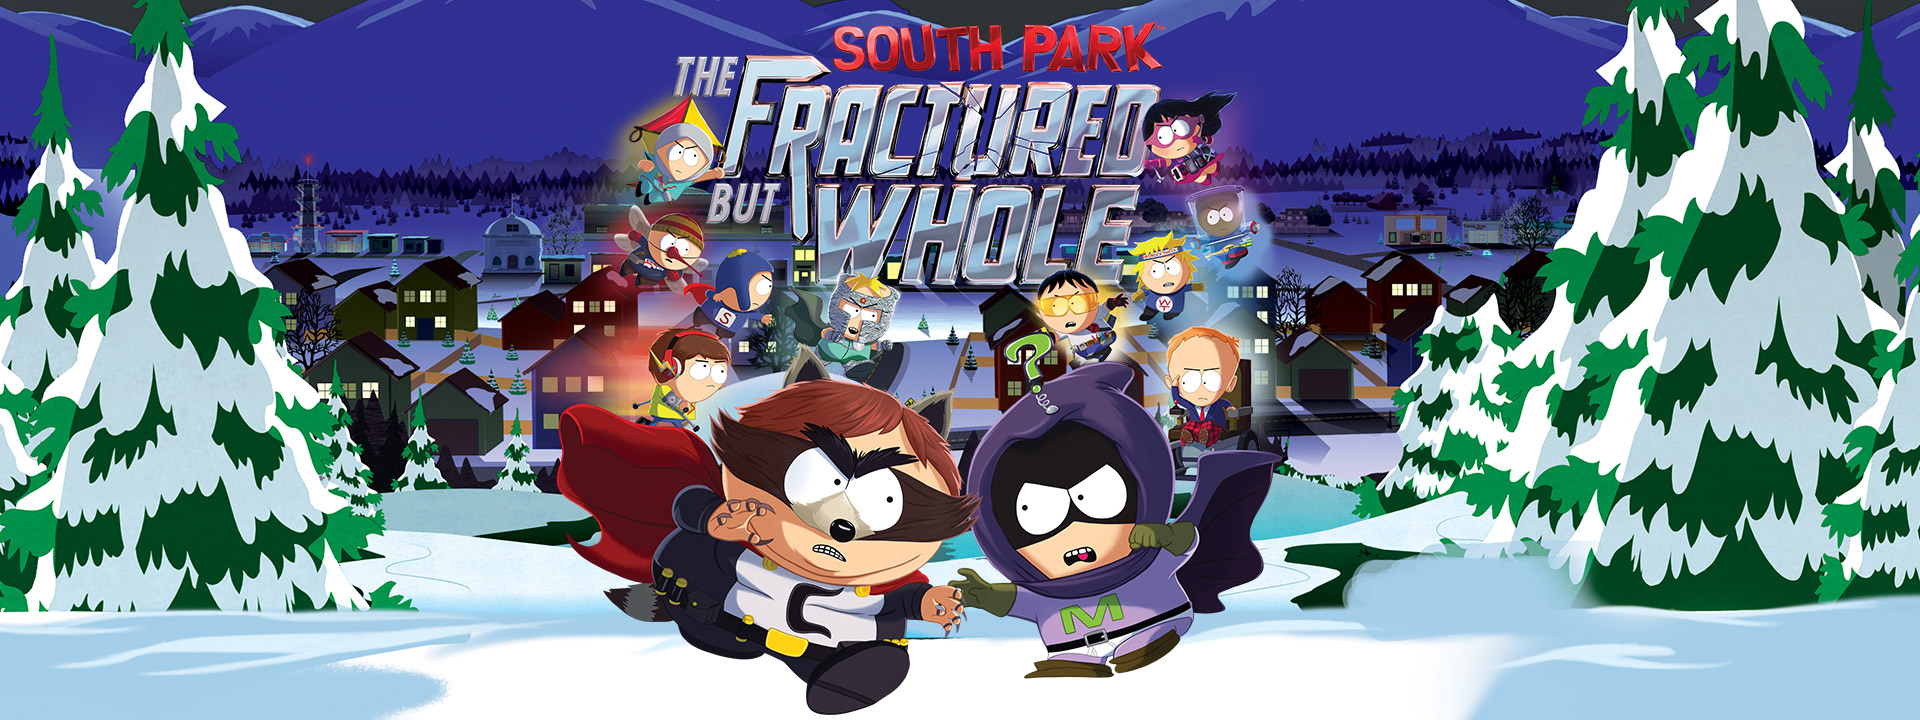 Южный парк whole. South Park the Fractured but whole. Южный парк игра 2. 2017 South Park the Fractured but whole. Южный парк игра 2022.